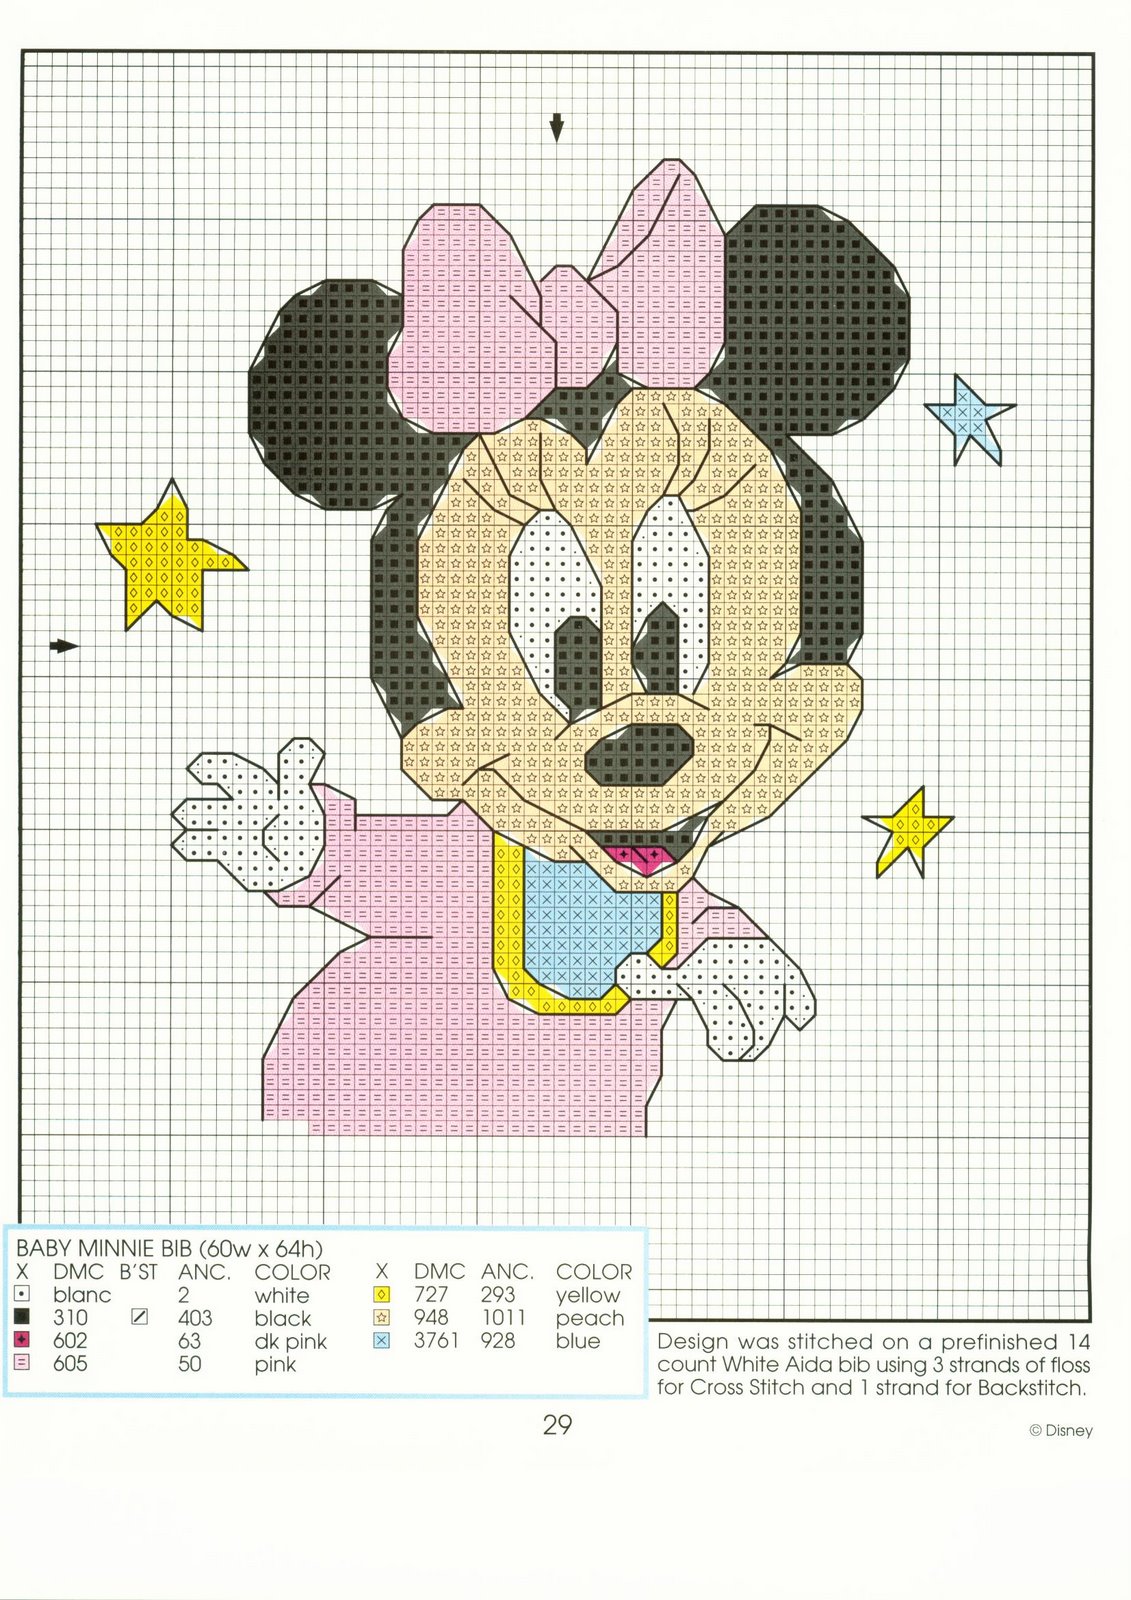 Cross stitch patterns to download Disney (9)